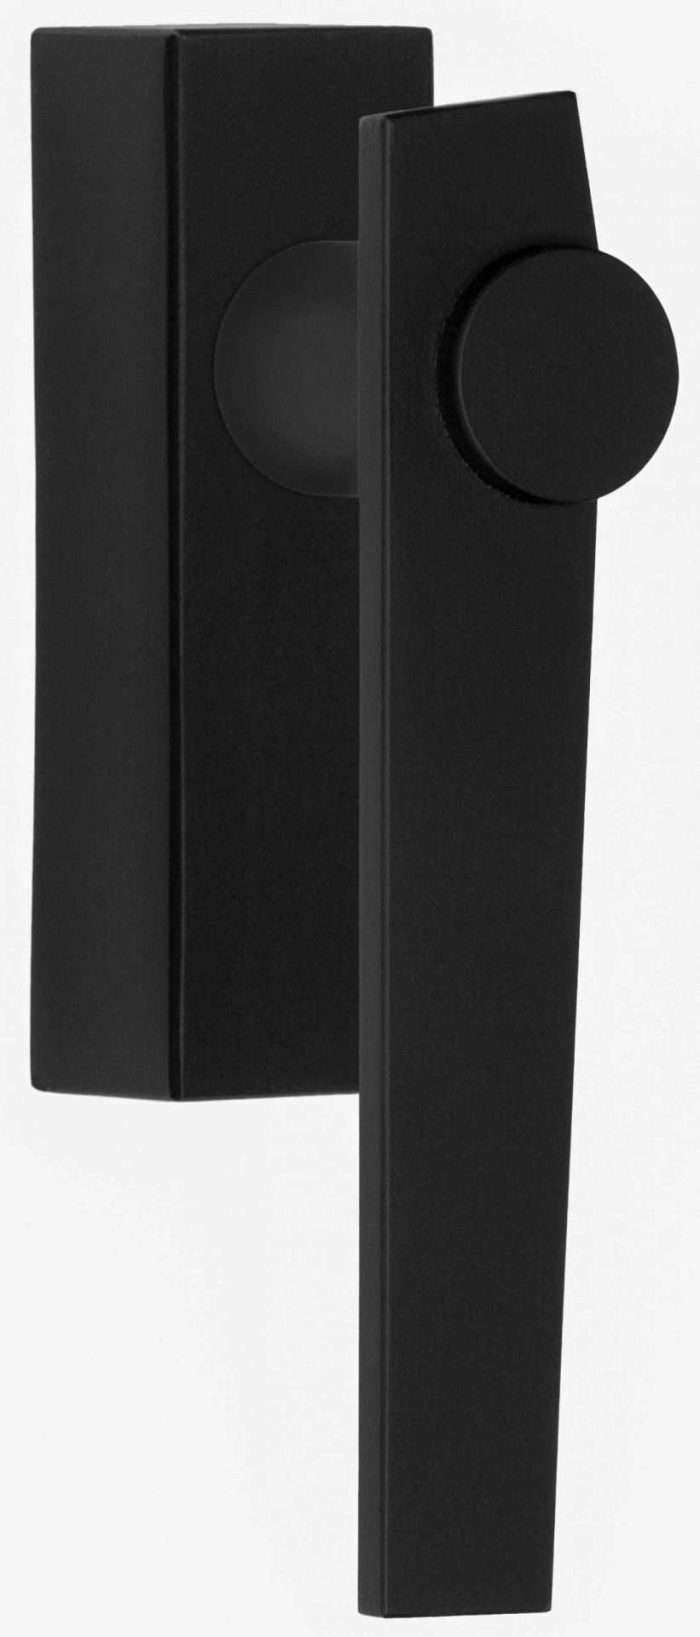 TENSE BB101-DKLOCK draaikiepgarnituur afsluitbaar linksdraaiend mat zwart